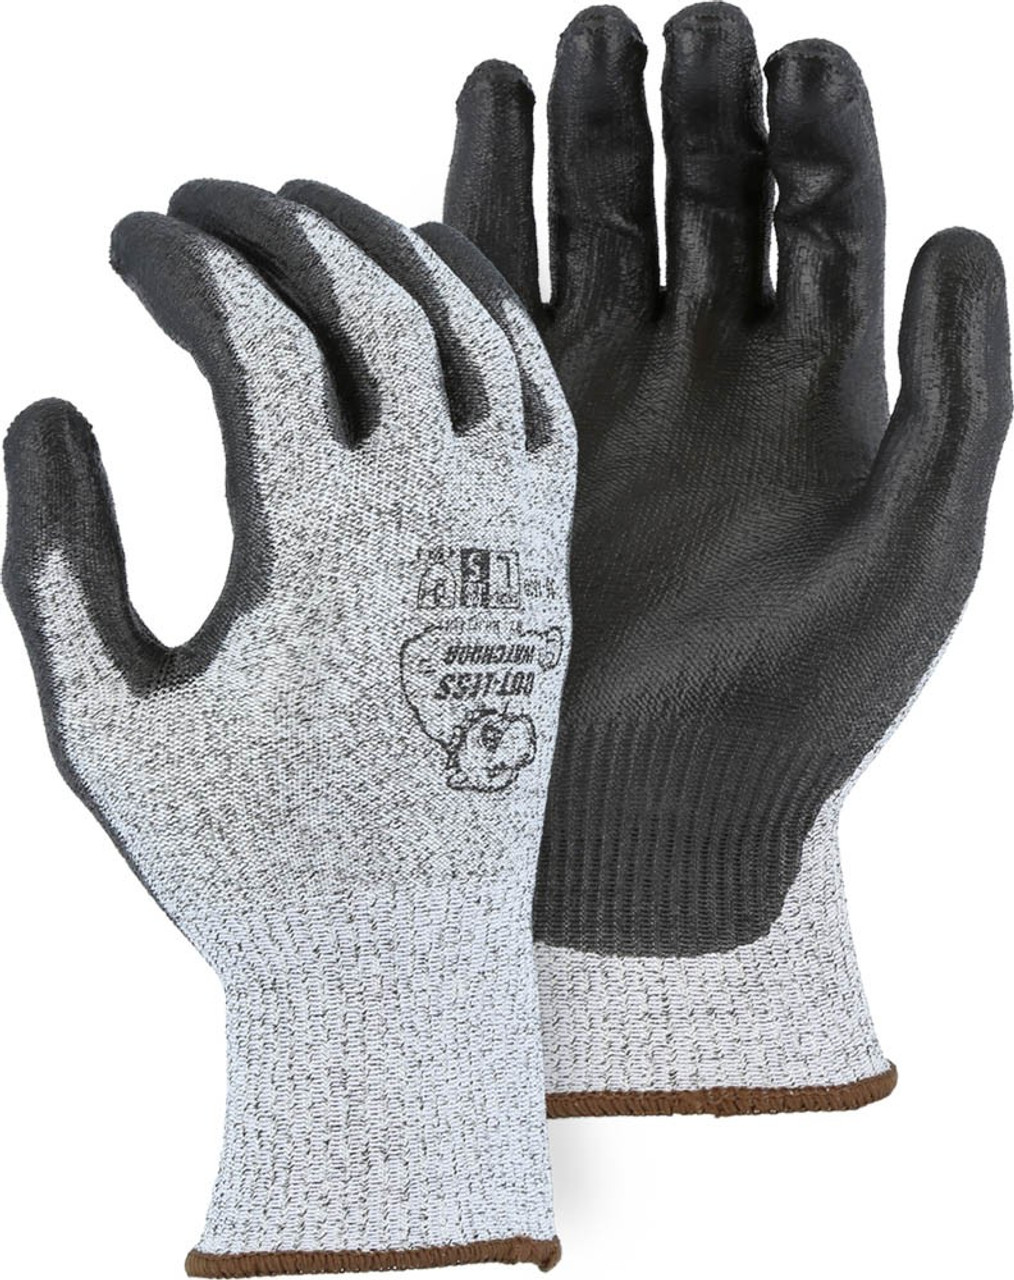 Majestic Glove Cut-Less Watchdog 35-1500 KorPlex/HPPE/Nylon